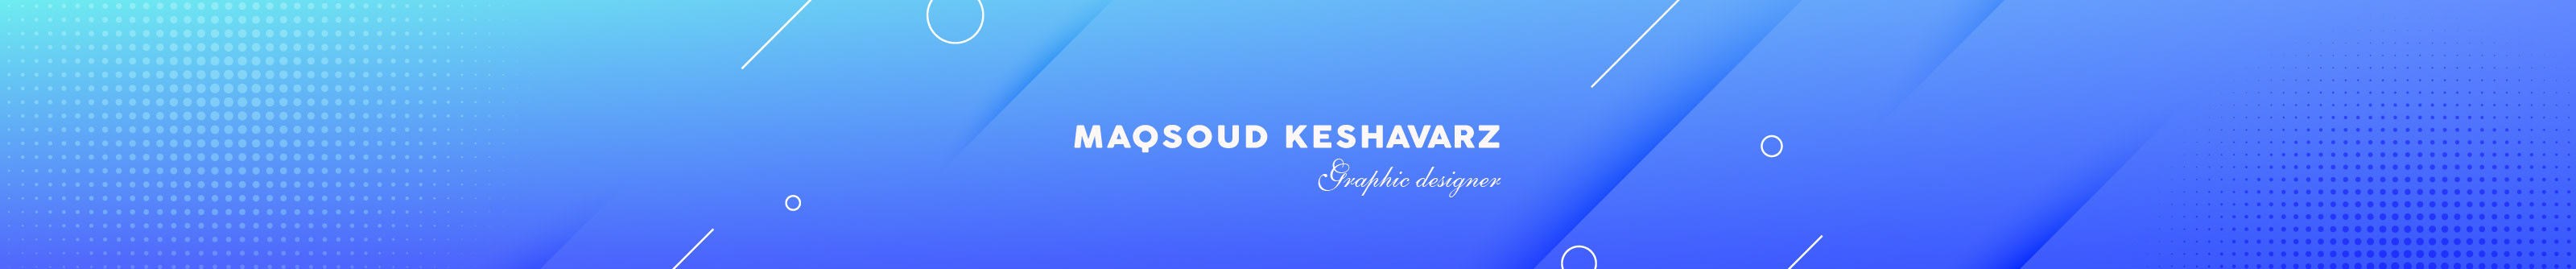 Maqsoud Keshavarzs profilbanner